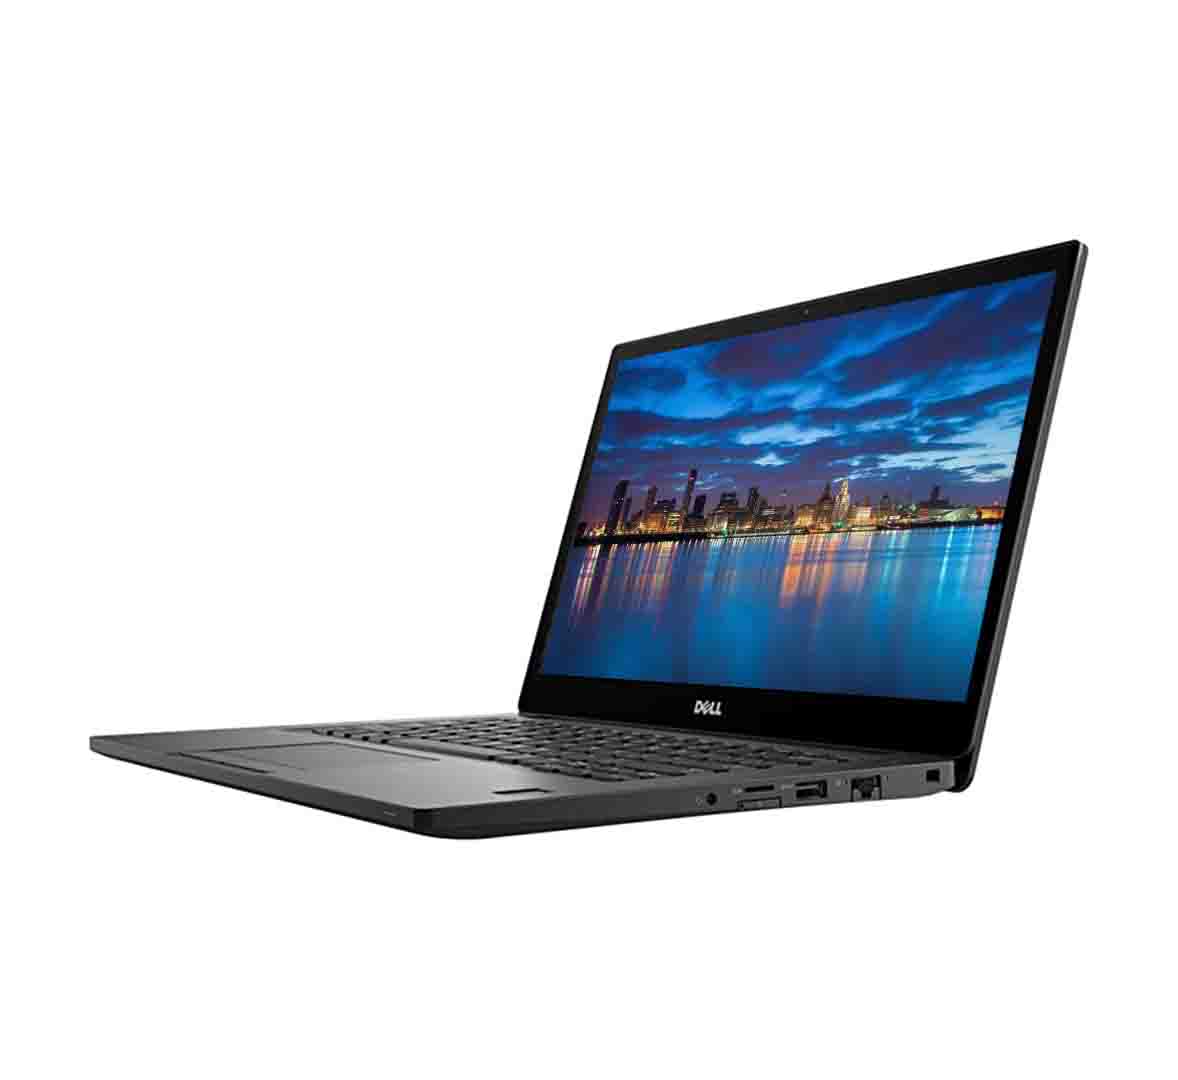 Dell Latitude 7480 Business Laptop, Intel Core i5-6th Generation CPU, 8GB RAM, 256GB SSD, 14.1 inch Display, Windows 10 Pro